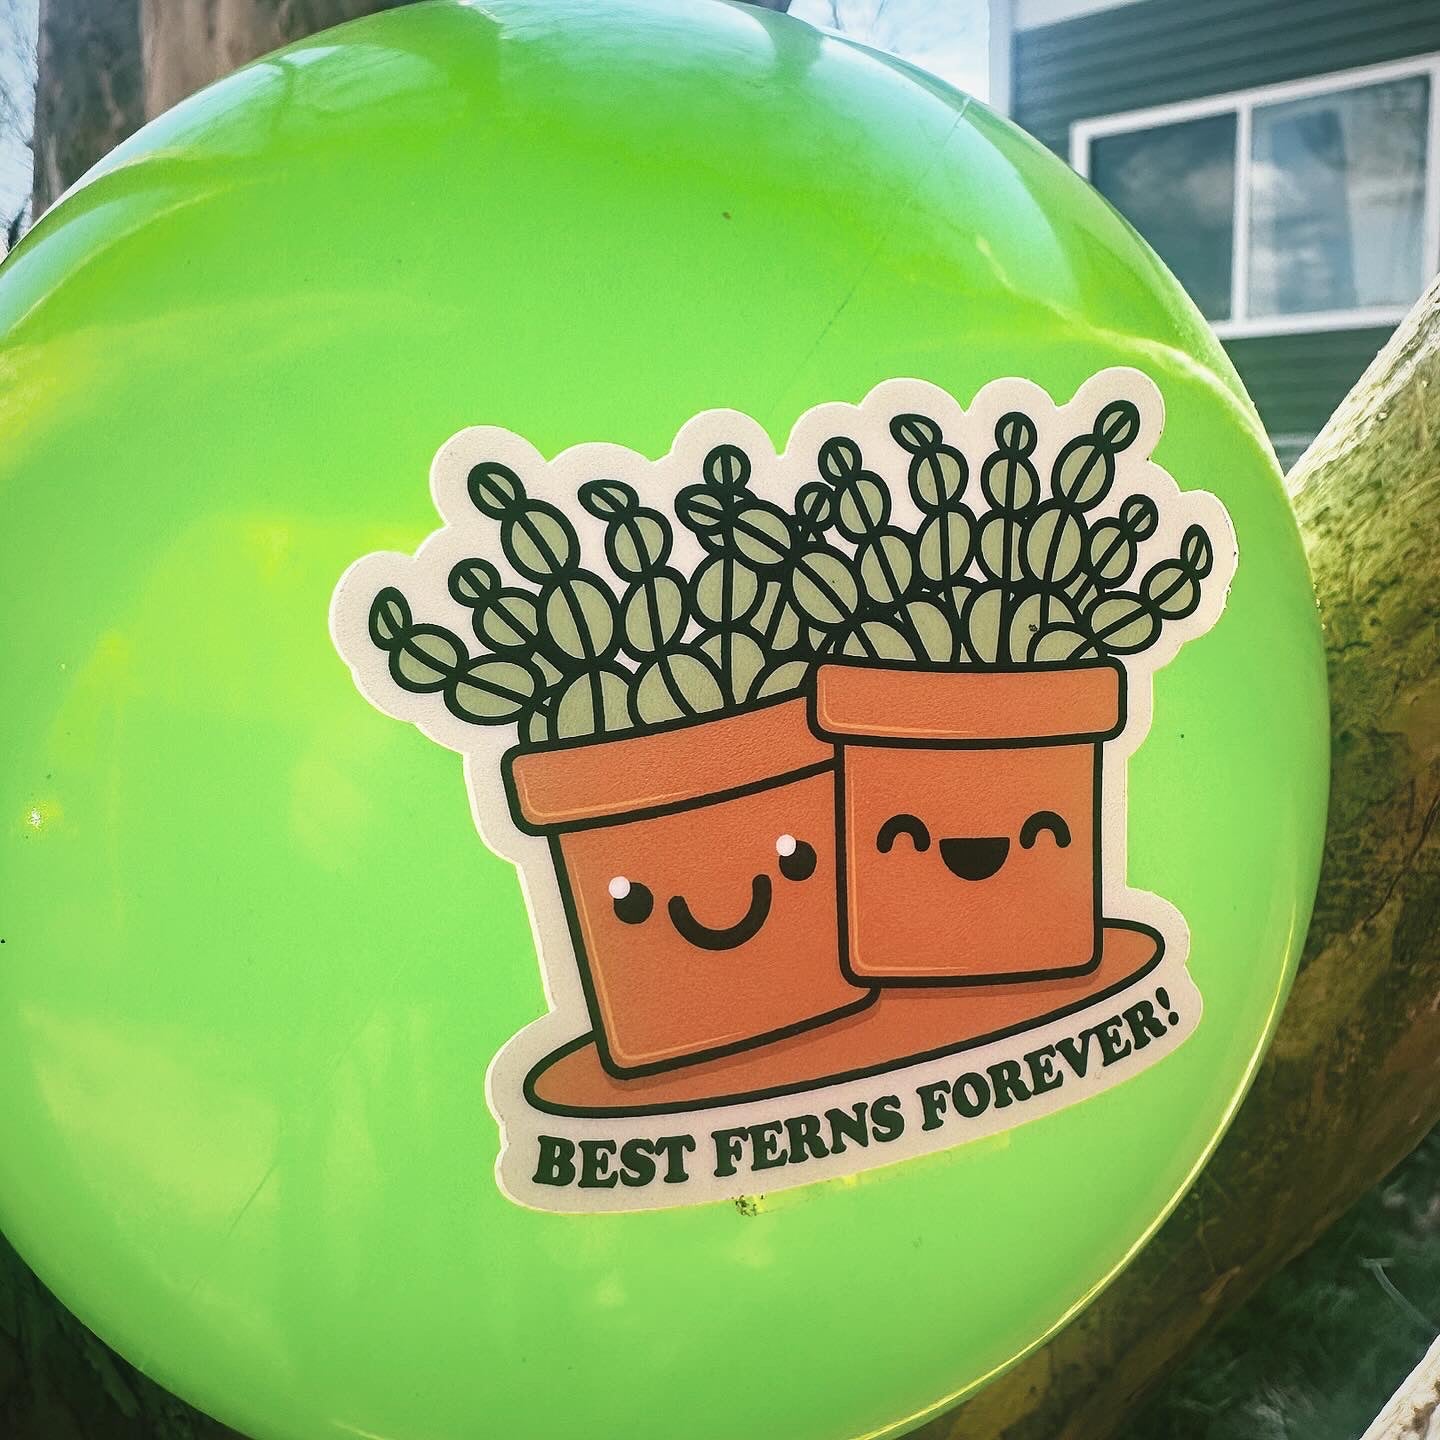 Best Ferns Forever - menottees